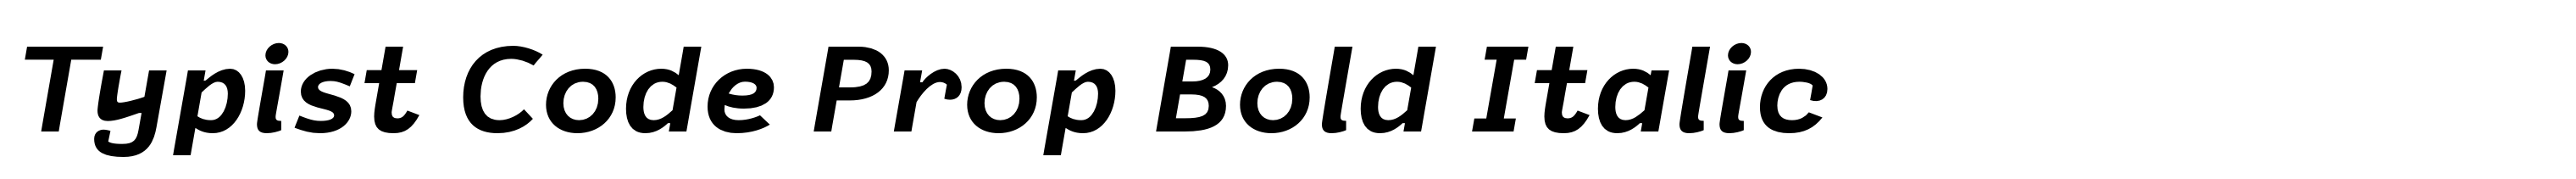 Typist Code Prop Bold Italic